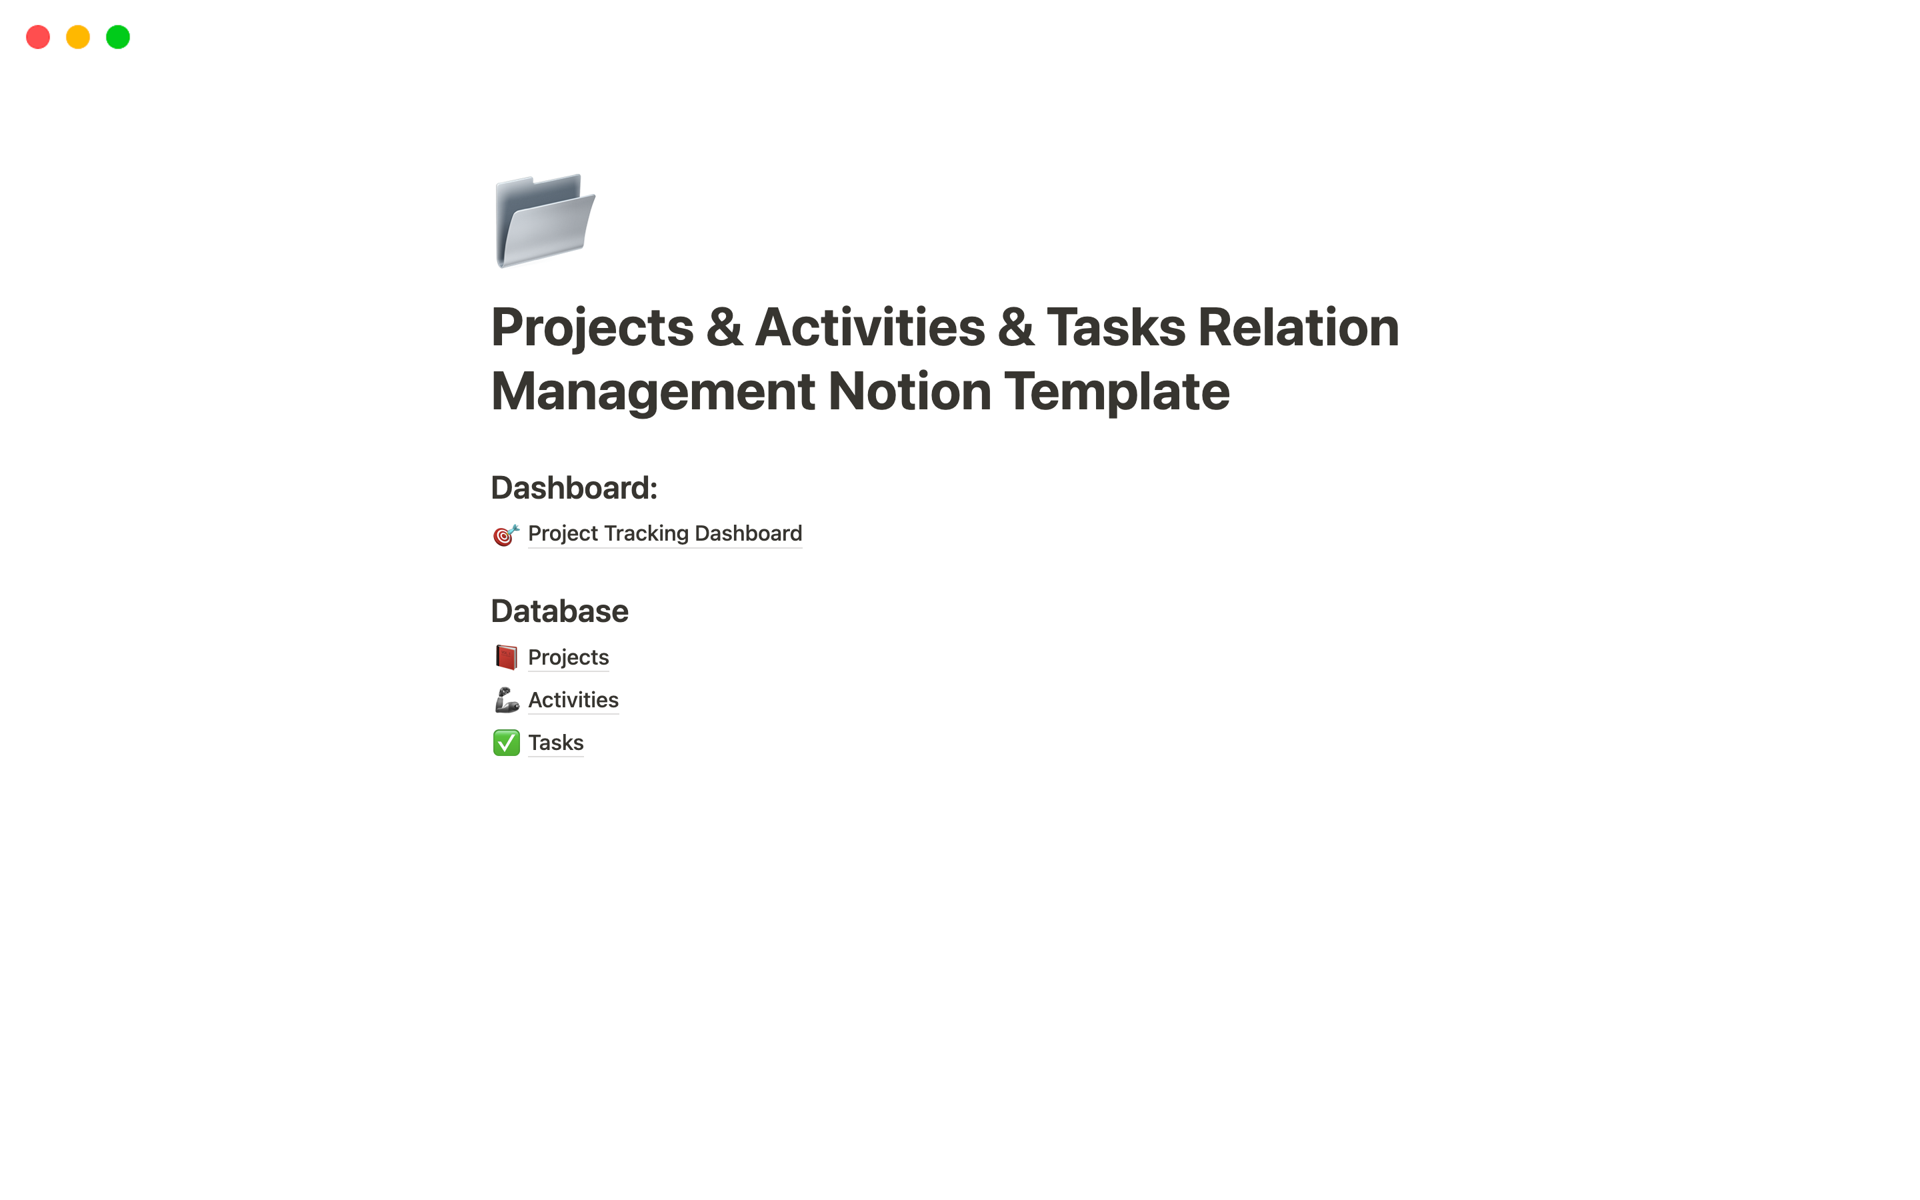 Projects & Activities & Tasks Relation Management님의 템플릿 미리보기